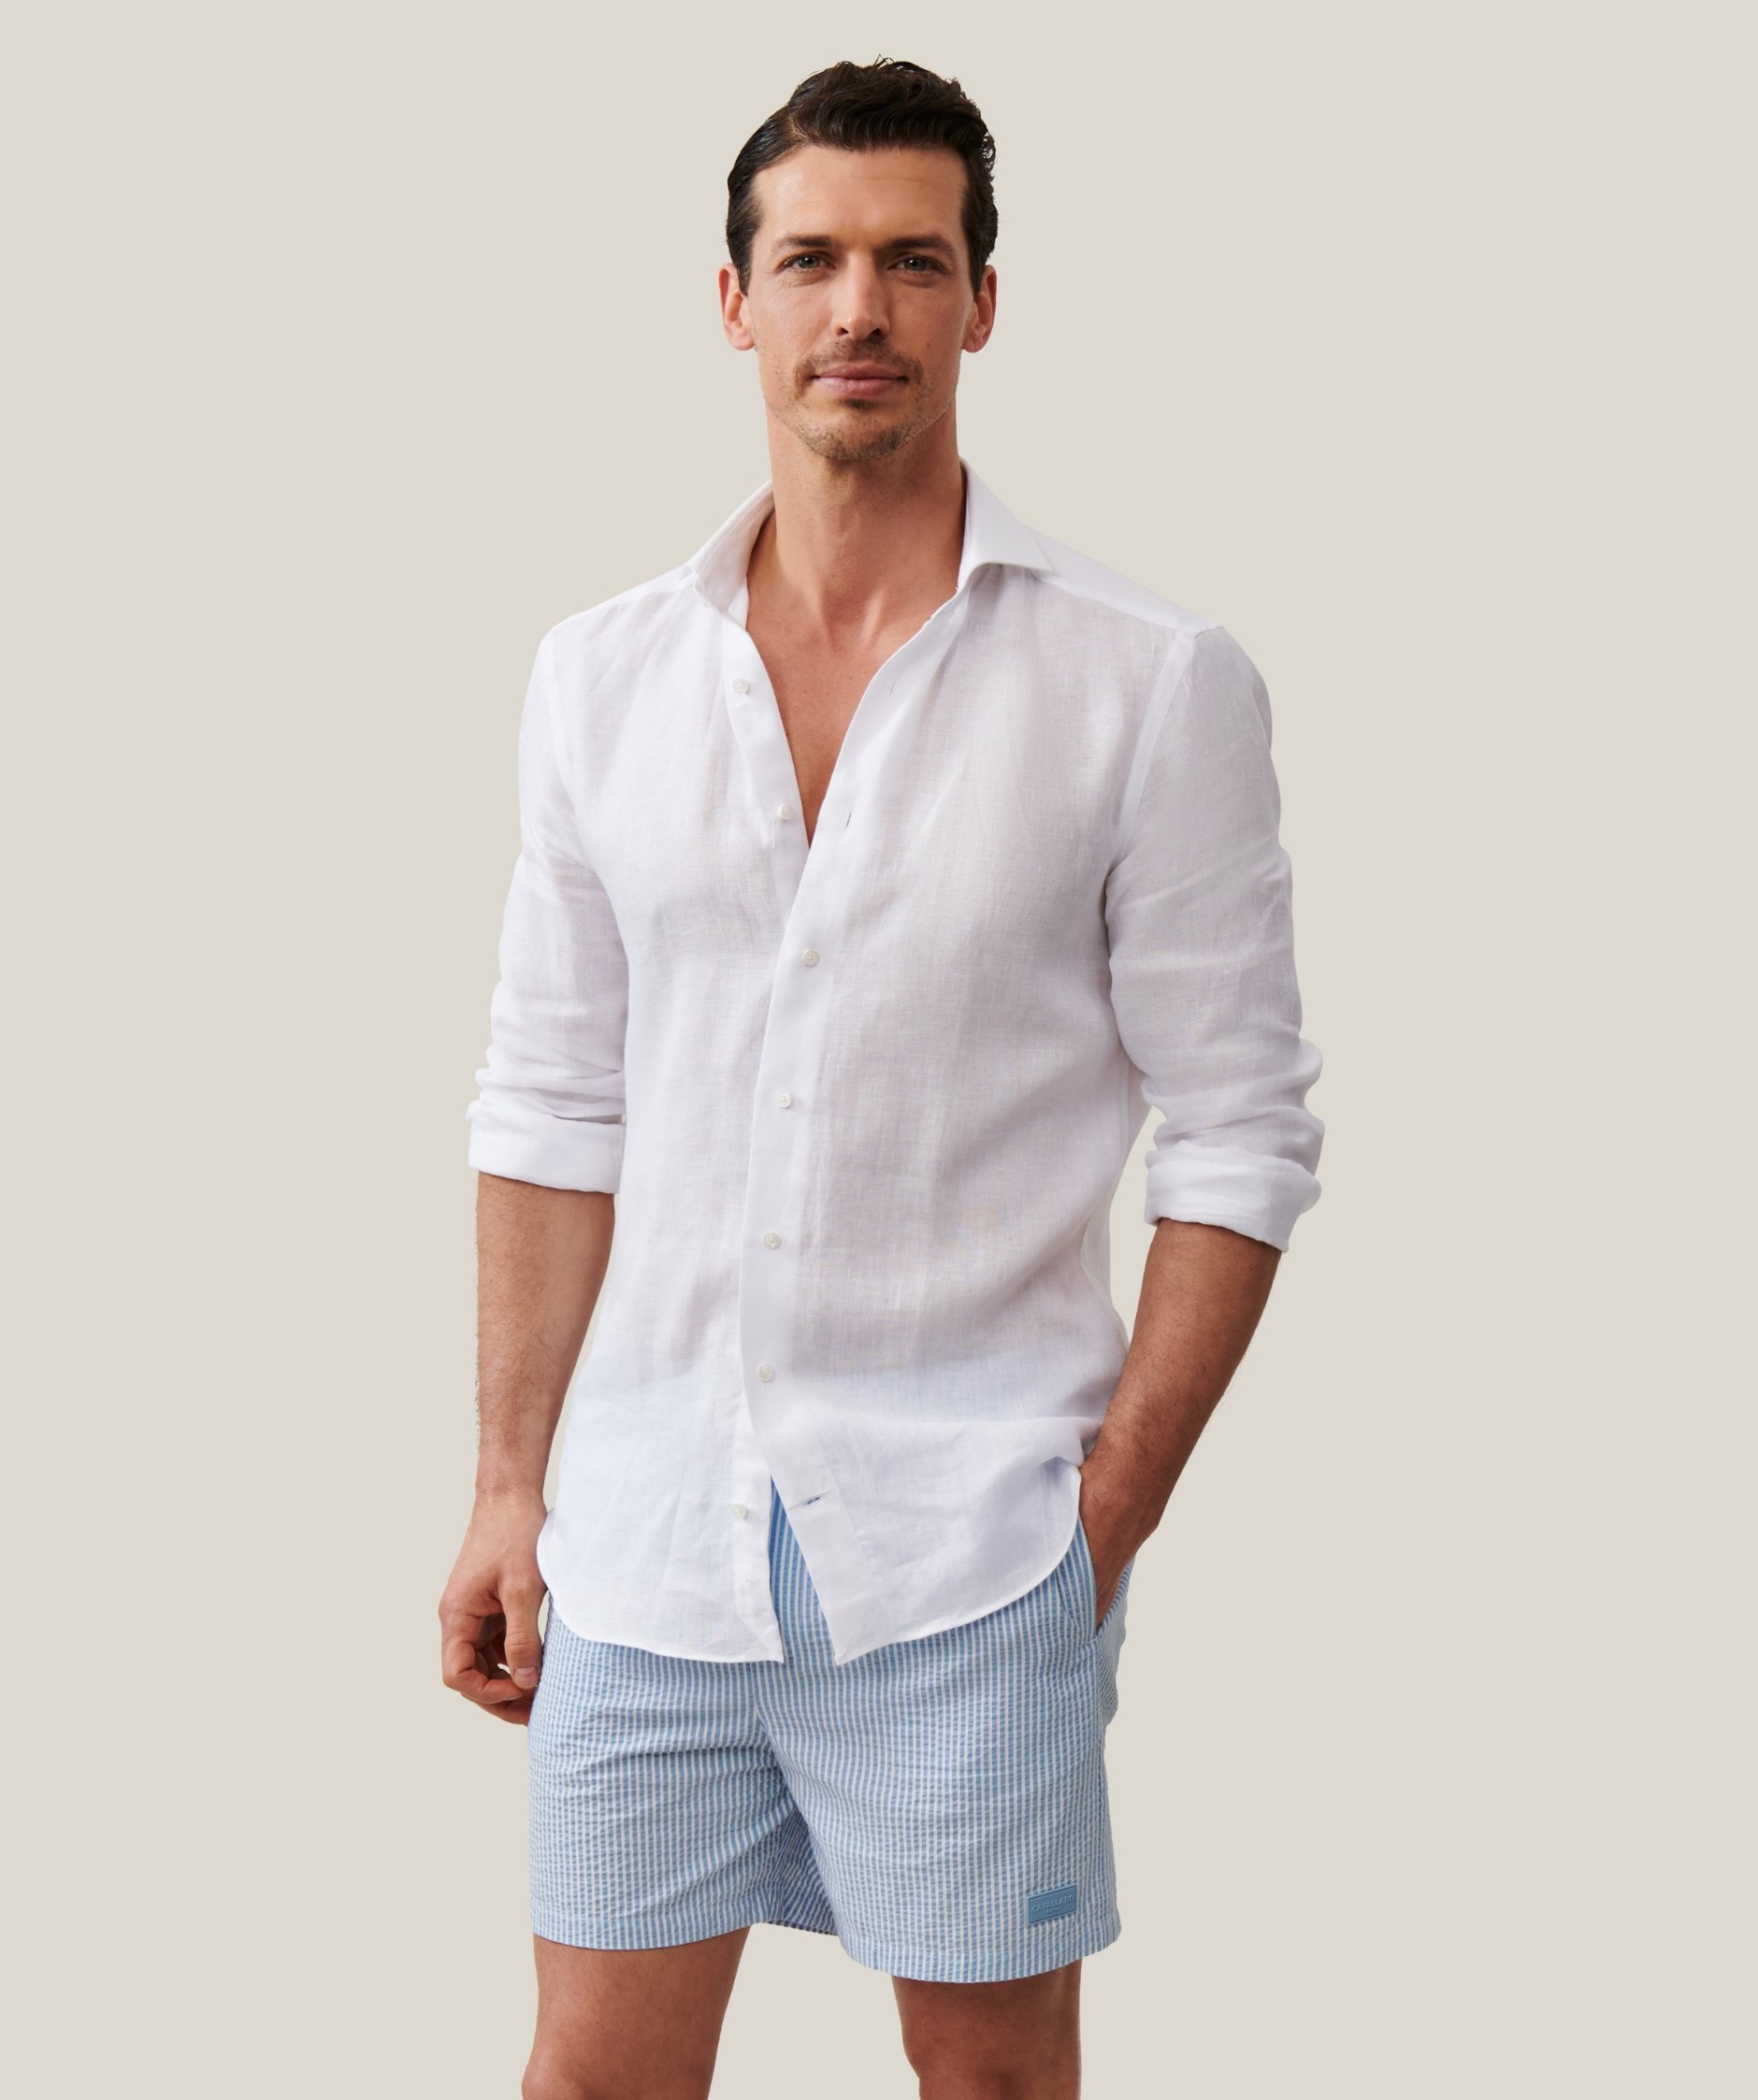 Shop The Look - Firento Shirt White